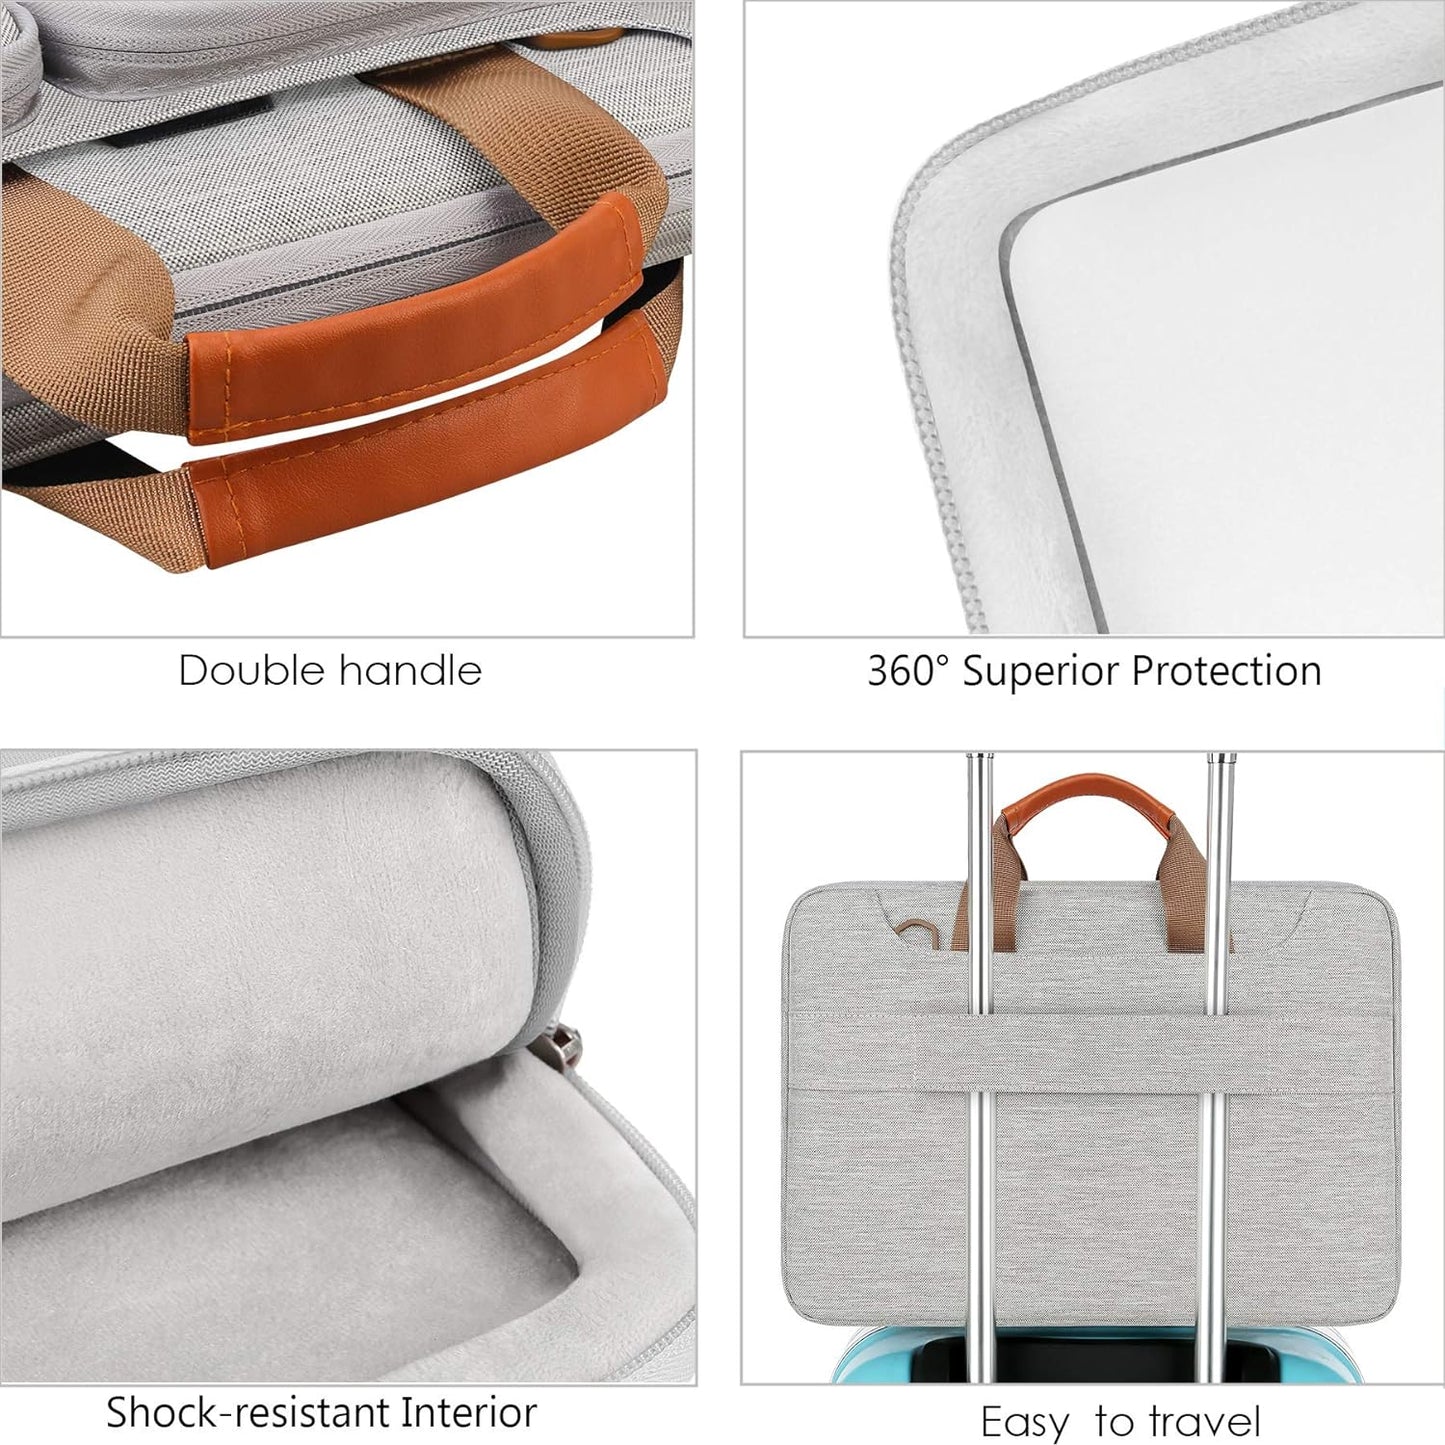 Lacdo 360° Protective Laptop Shoulder Bag, 15-15.6 inch Laptop Sleeve Case